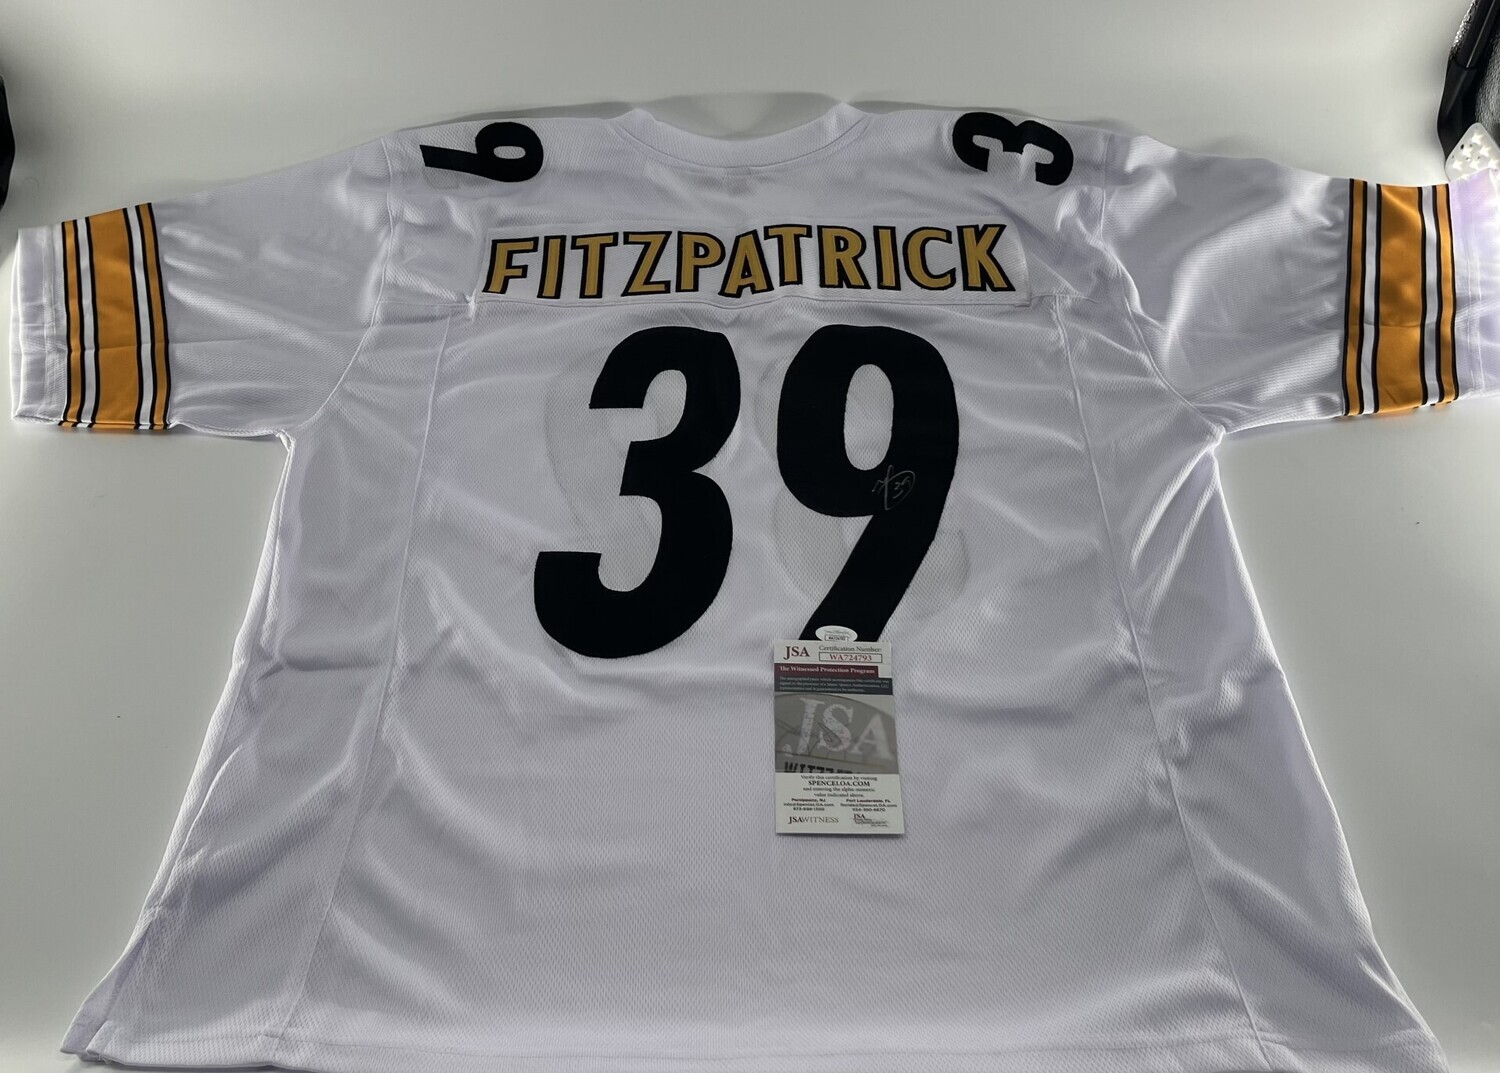 minkah fitzpatrick jersey number